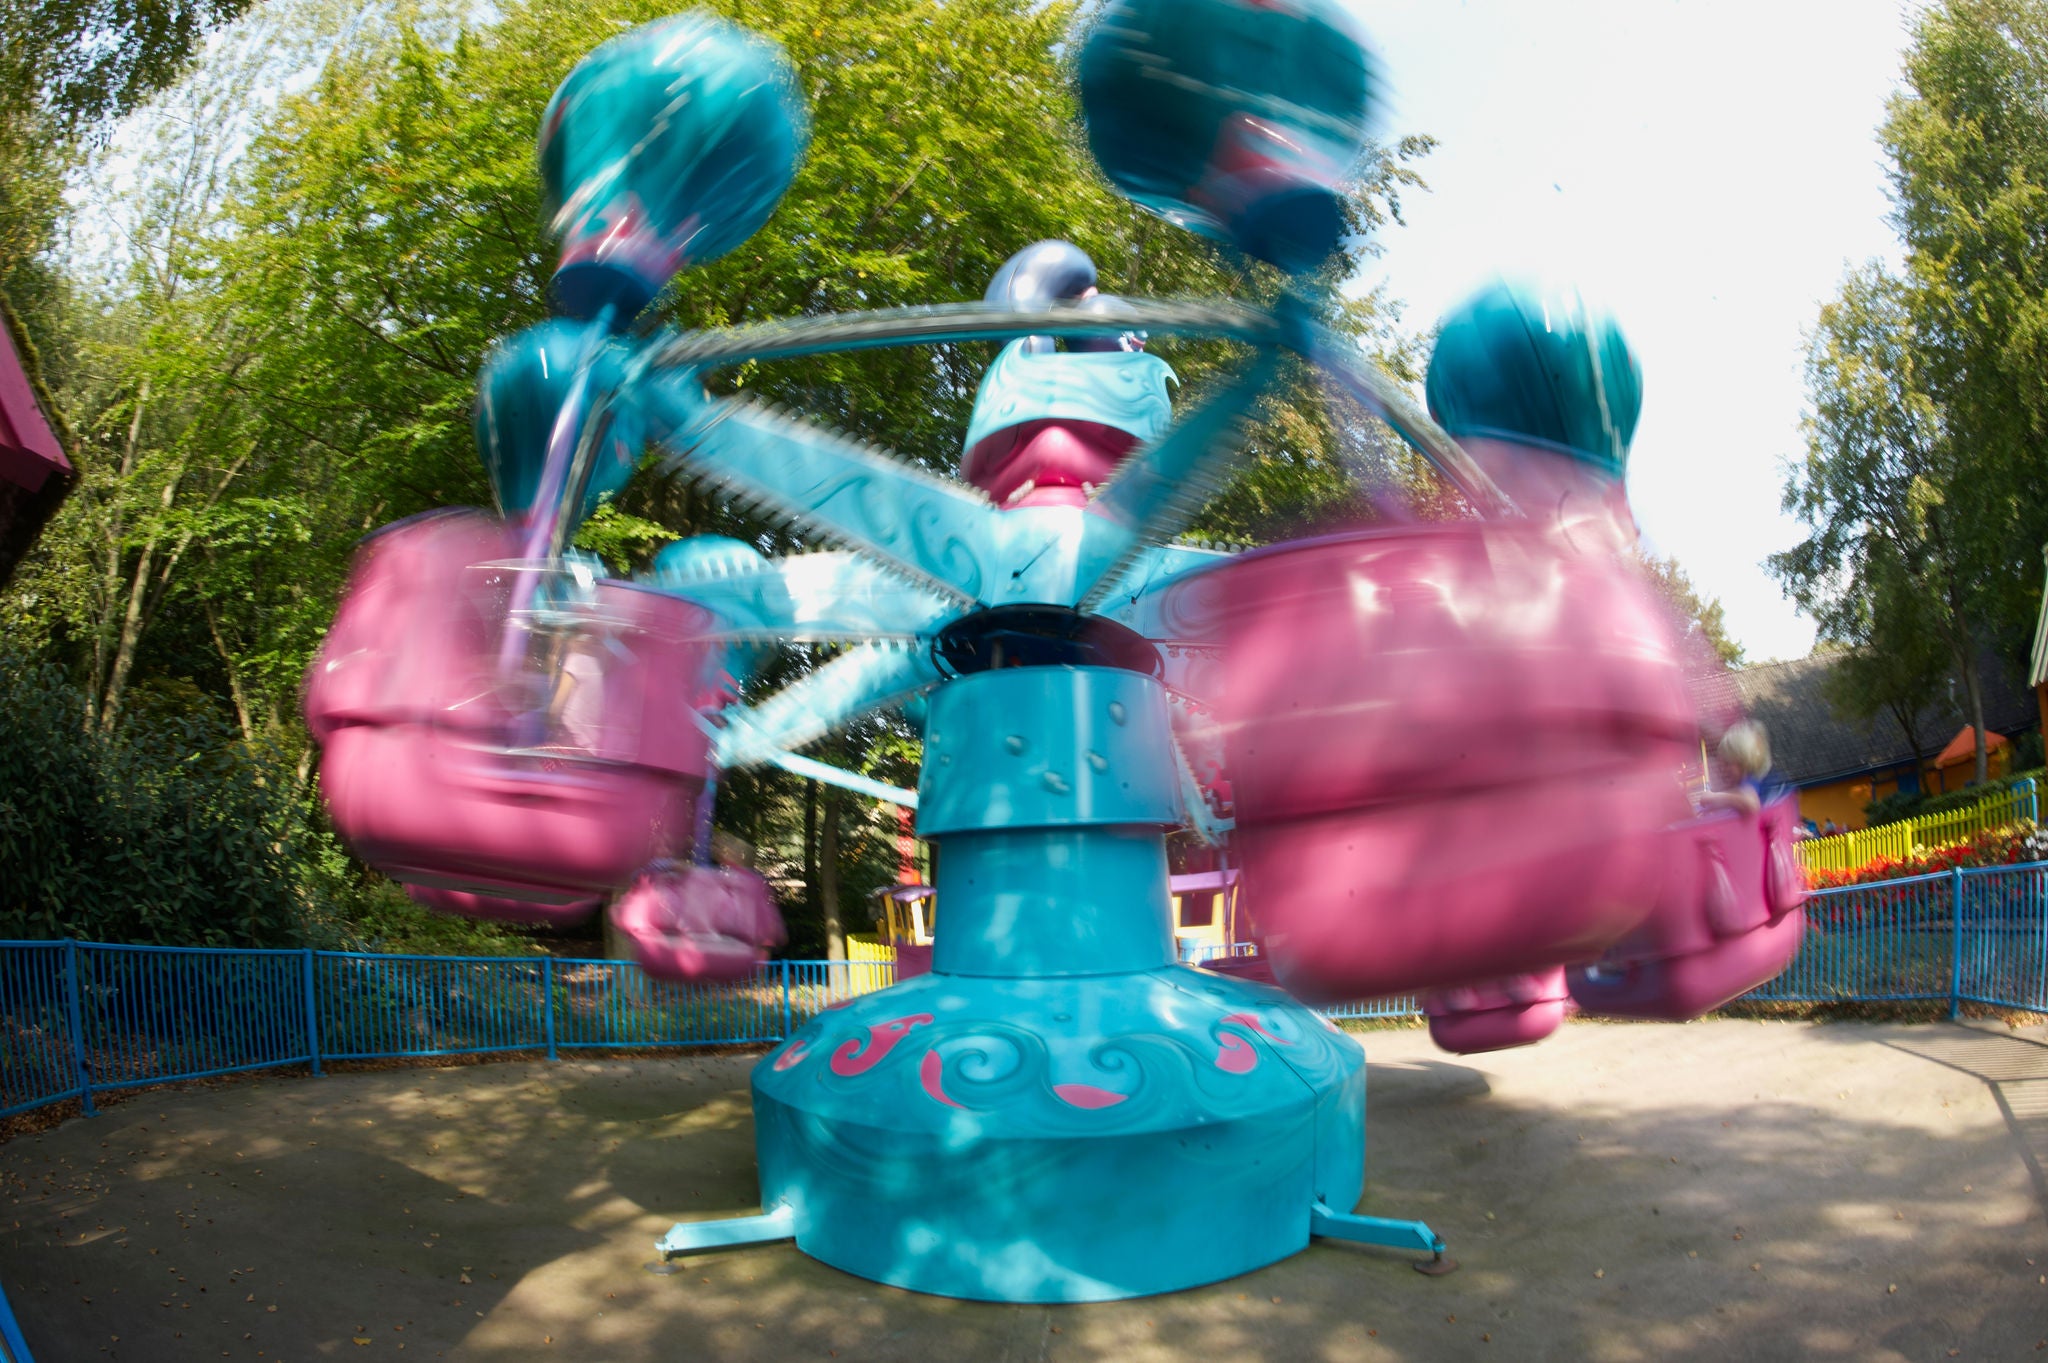 A ride in a hot air balloon at Fibi's Bubble Swirl.